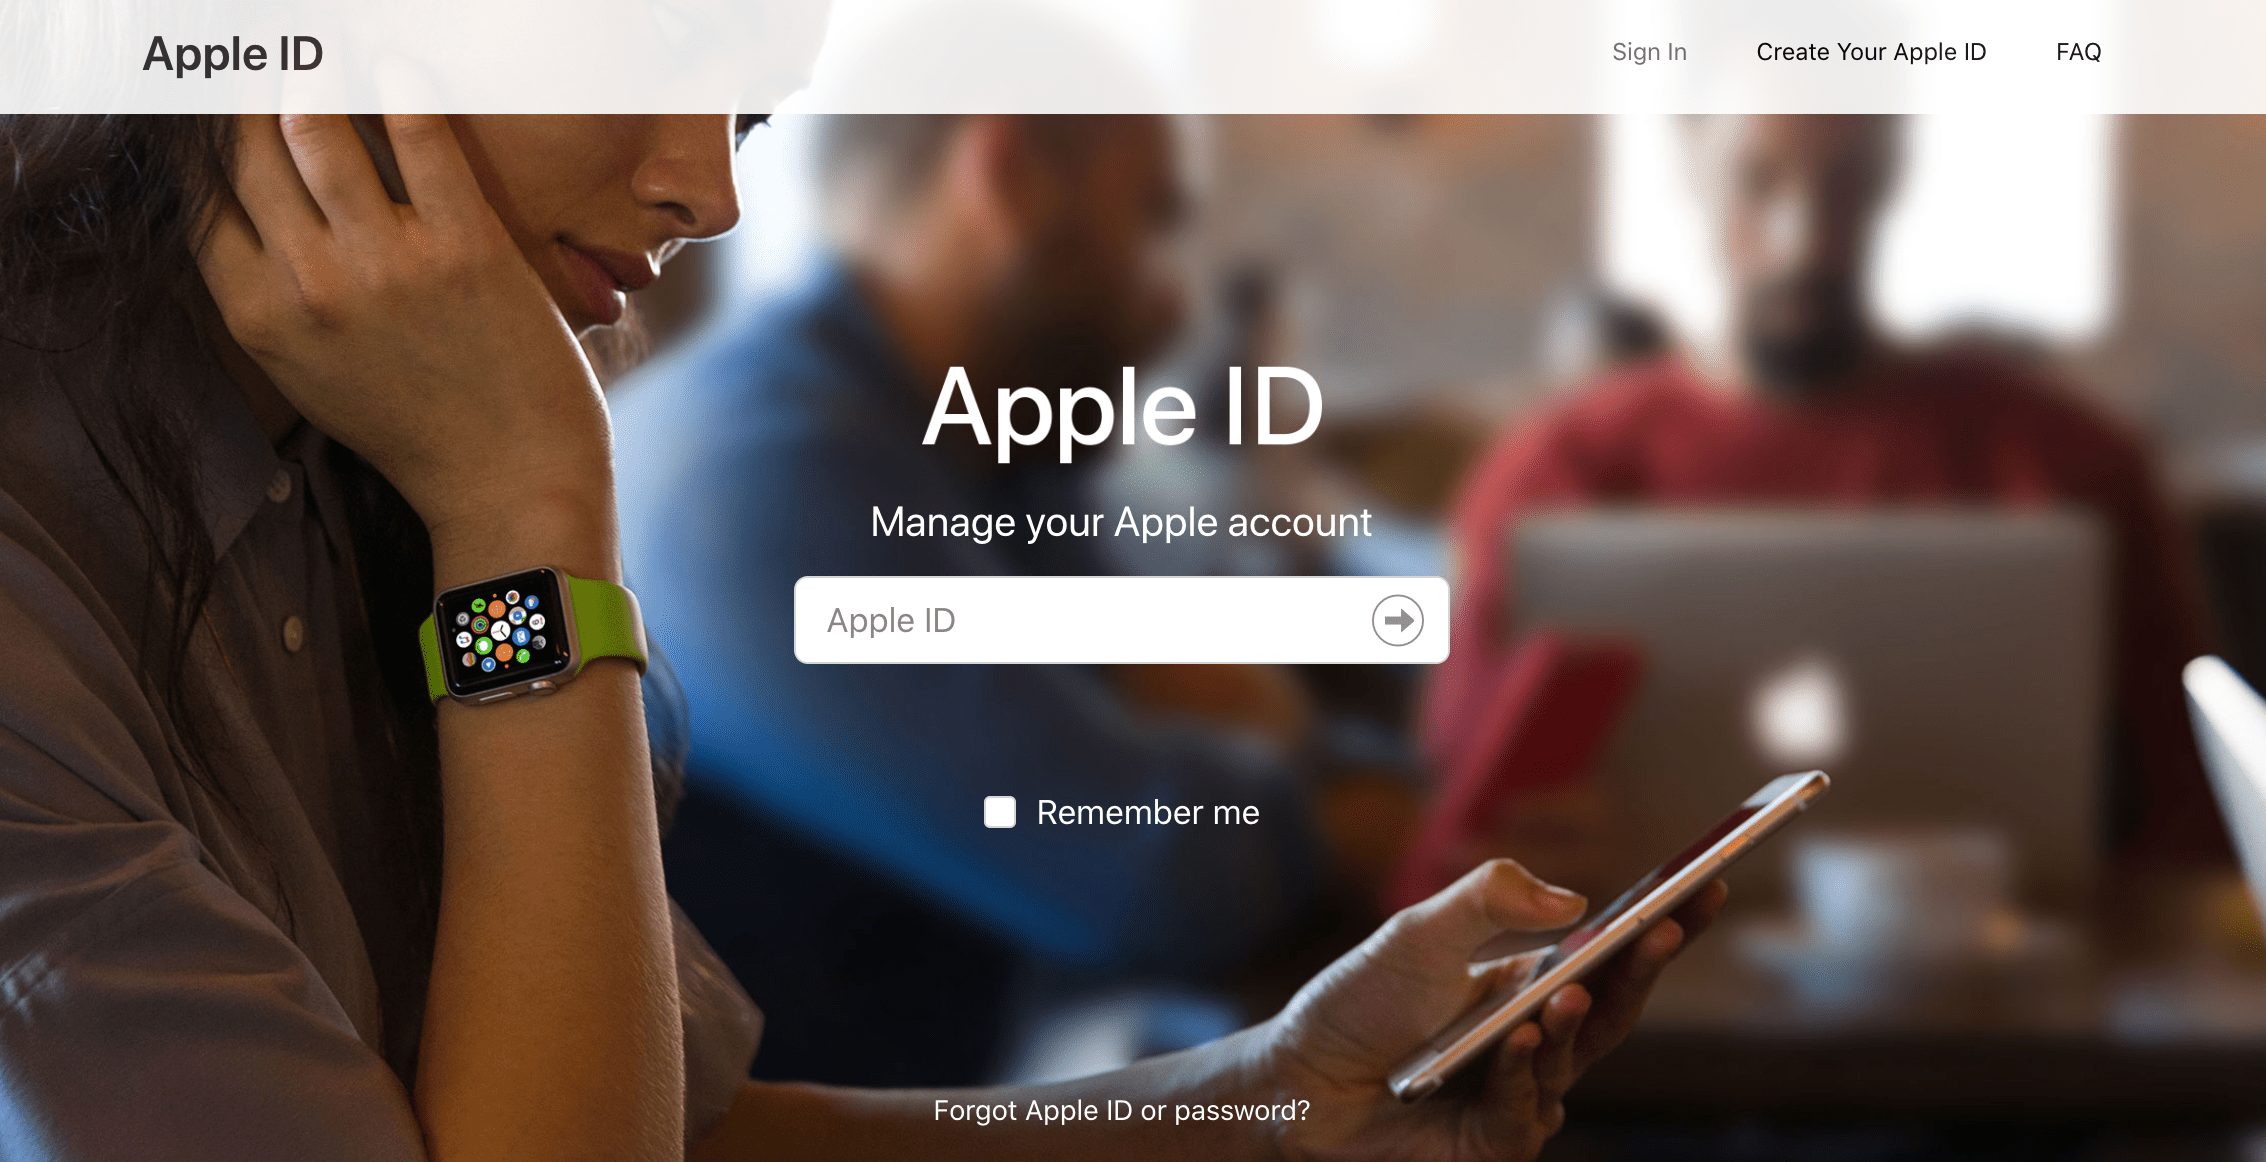 Снимок экрана со страницей входа в Apple ID